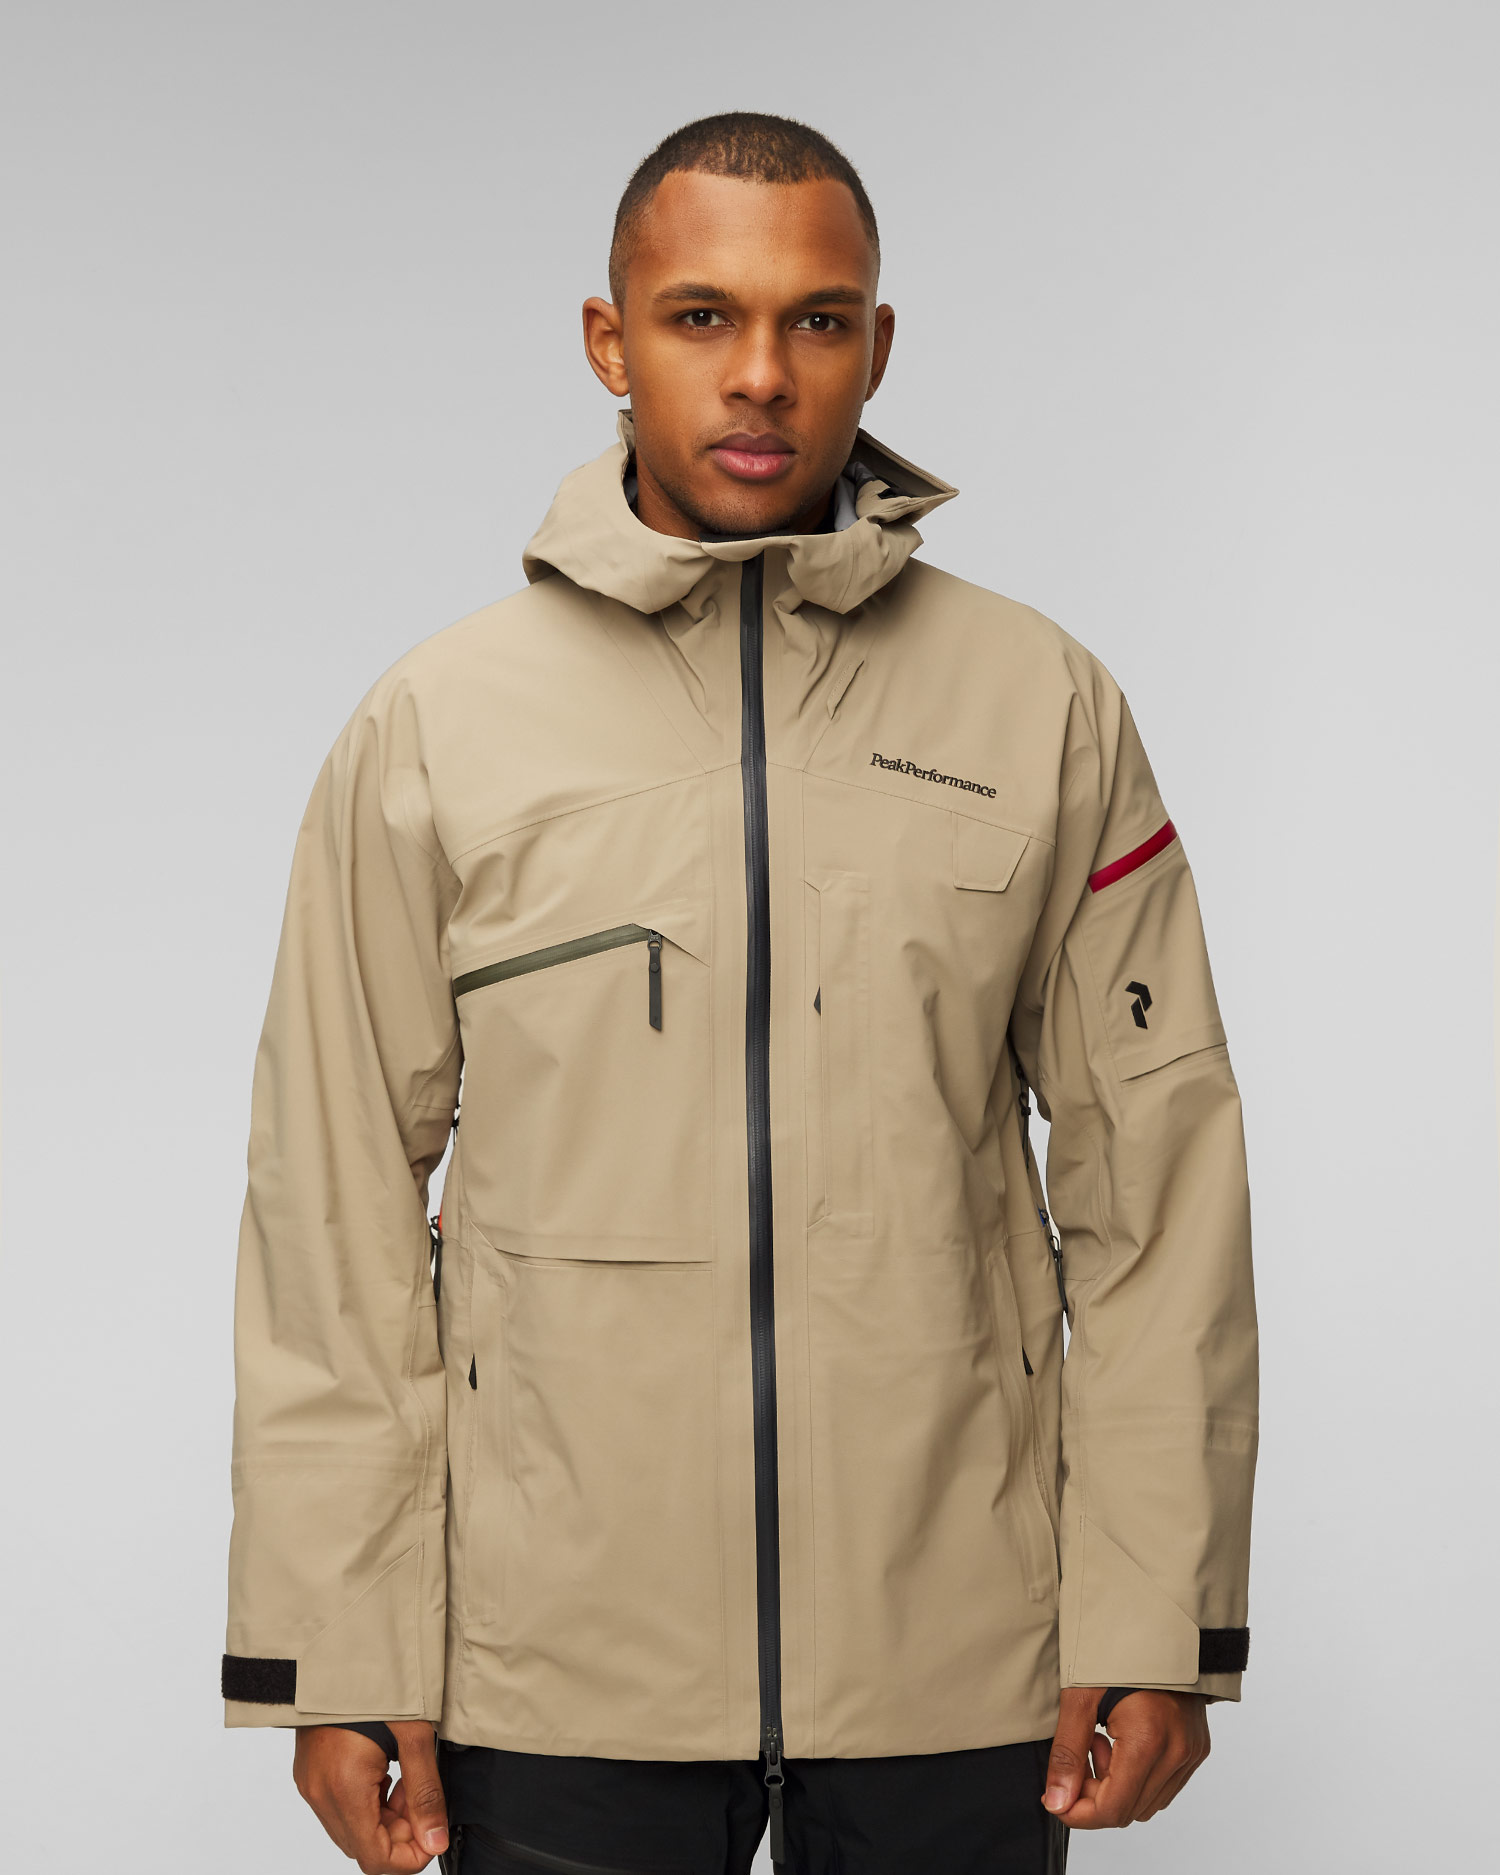 Men's membrane jacket Peak Performance Alpine GORE-TEX 3L G78054120-n34 |  S'portofino